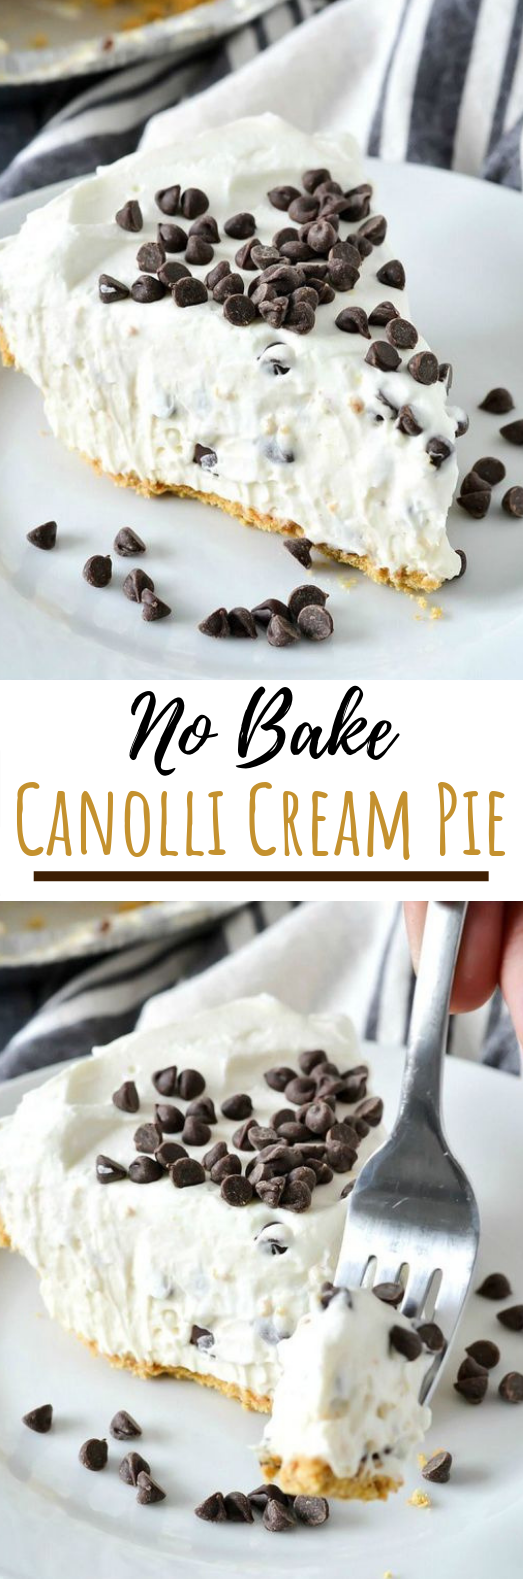 No-Bake Cannoli Cream Pie #easy #dessert